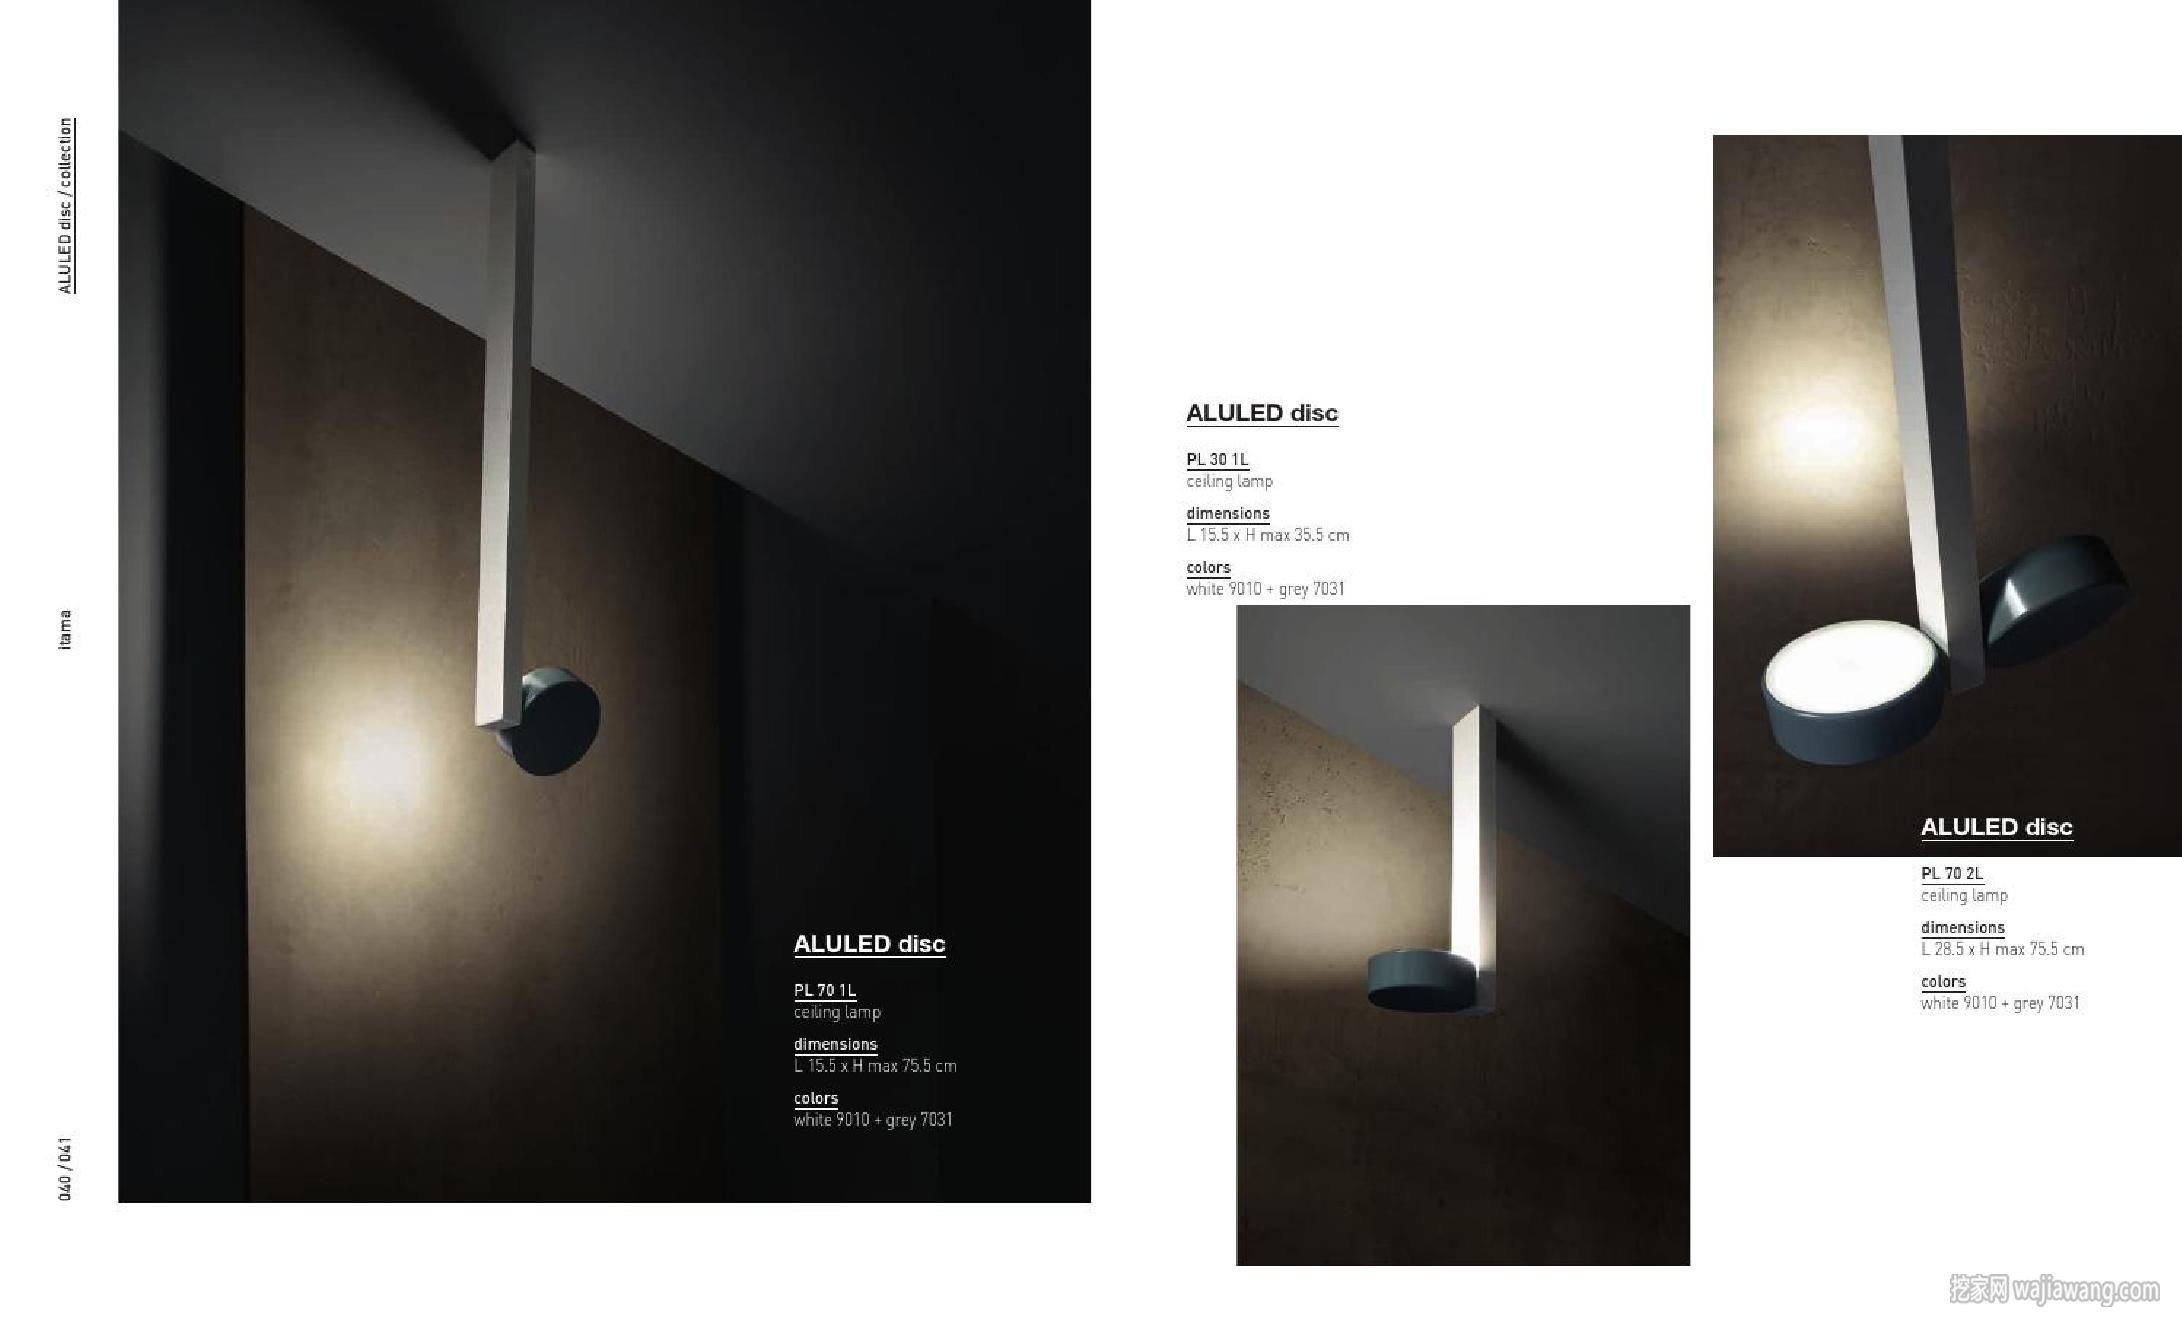 灯饰设计 灯饰设计电子杂志 Itama 2015(图)